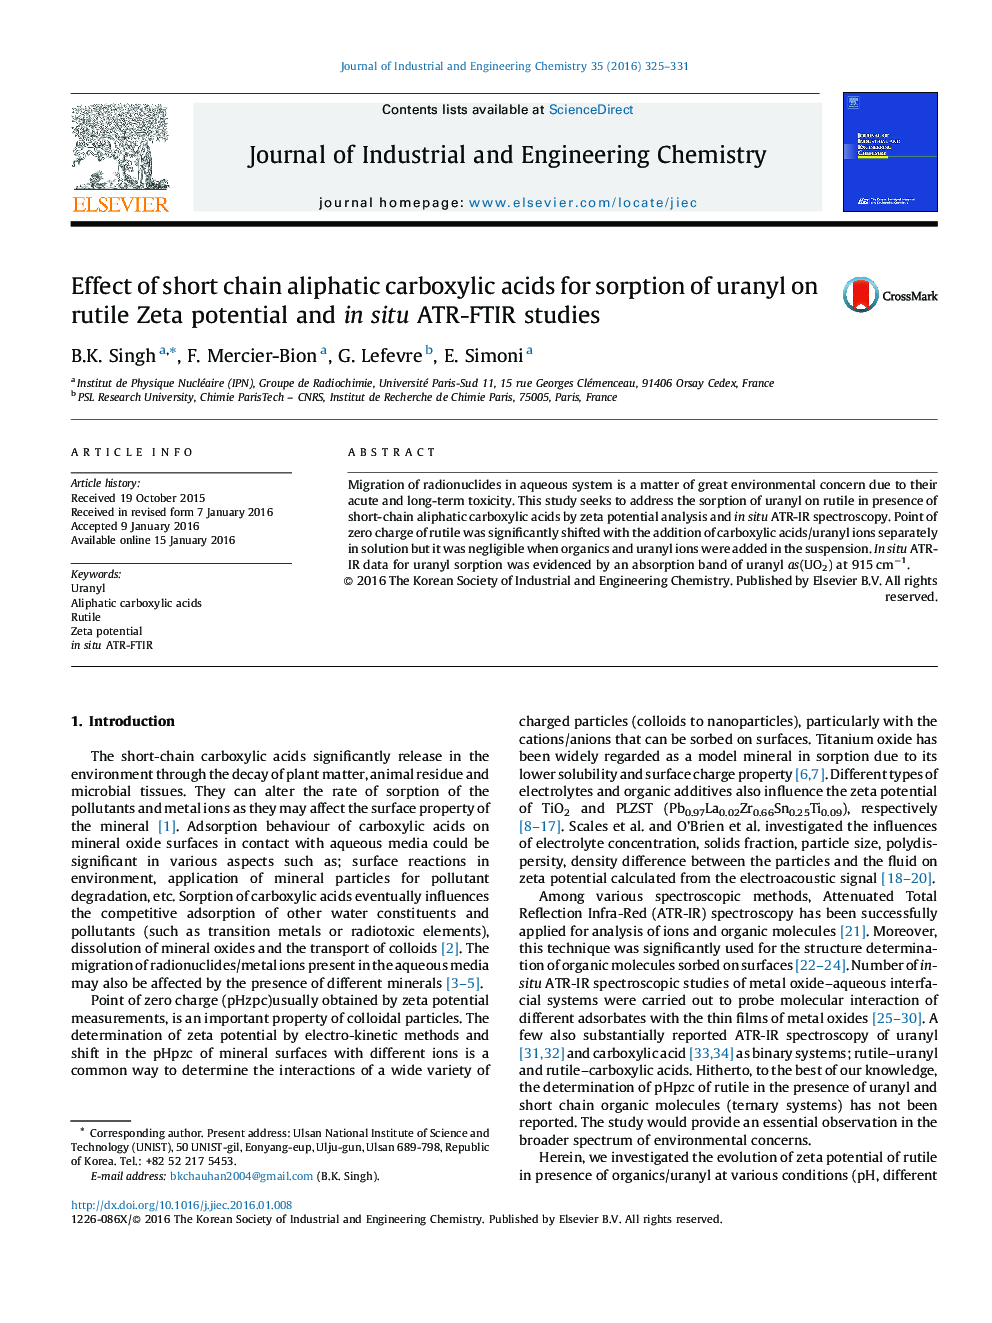 Effect of short chain aliphatic carboxylic acids for sorption of uranyl on rutile Zeta potential and in situ ATR-FTIR studies